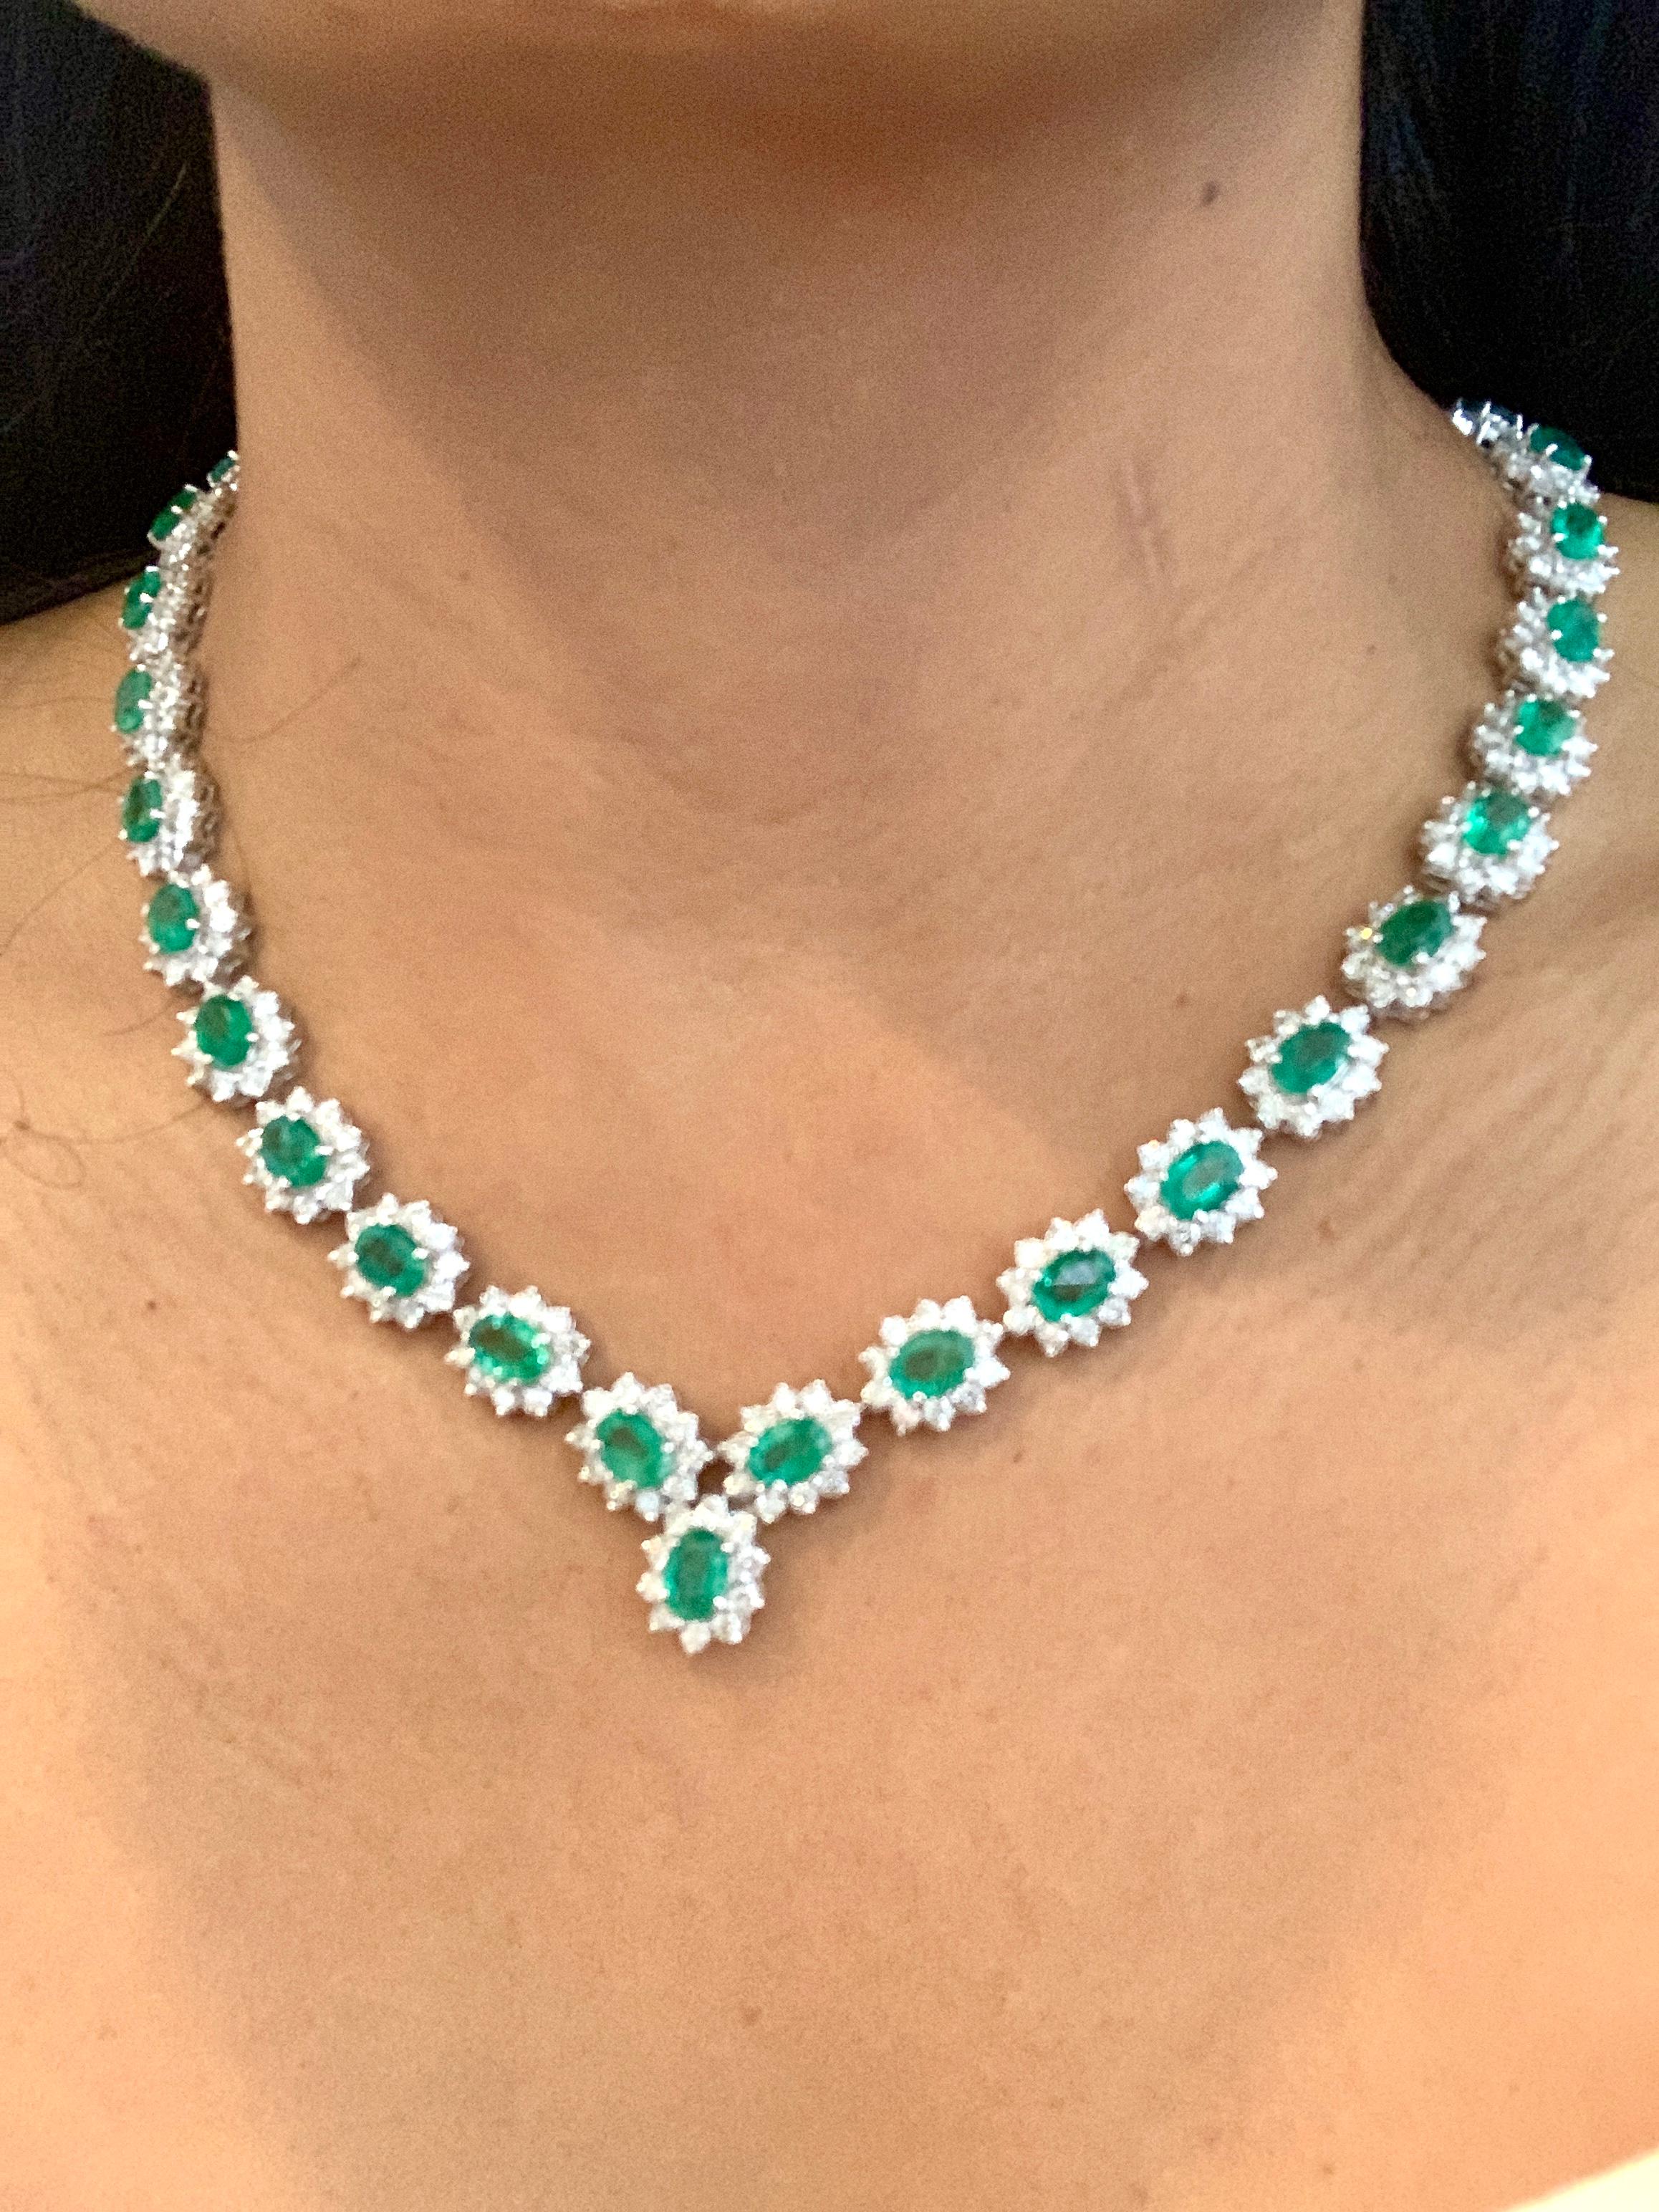 30 Carat Oval Shape Natural Emerald & 23 Carat Diamond Necklace in 18 Karat Gold For Sale 8